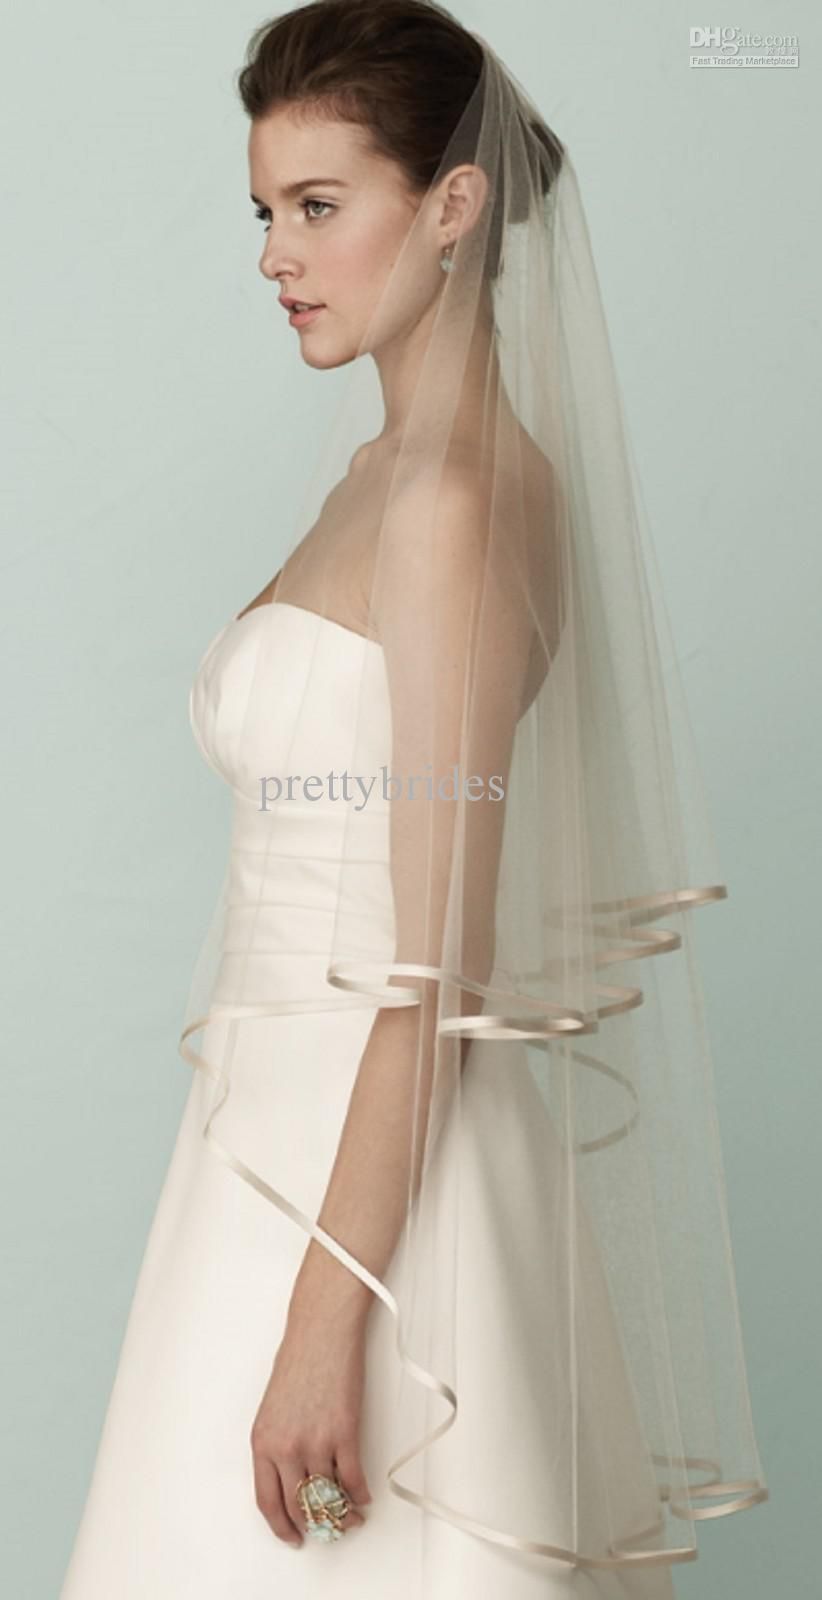 Wholesale Wedding Veil – Buy Hot 2T Edged White Ivory Wedding Veil Simple Soft Tulle Net Bridal Veils Best Price RL9431, $10.23 |